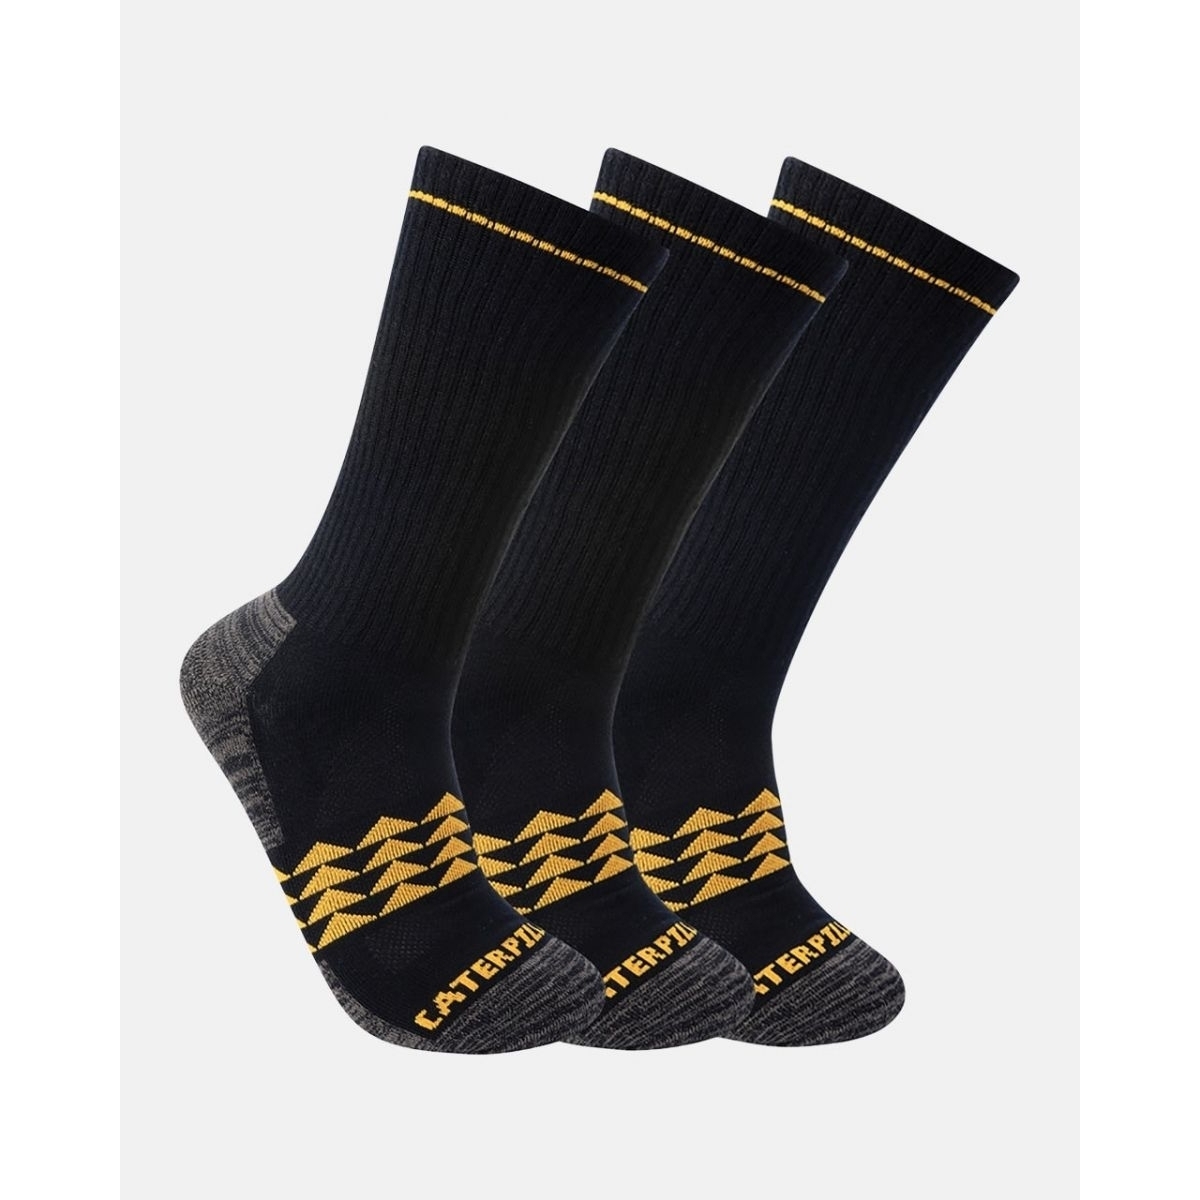 Caterpillar Men's Max Half Cushion Crew Socks (3 Pack) Black - 43CT302362TD-BLK BLACK - BLACK, L